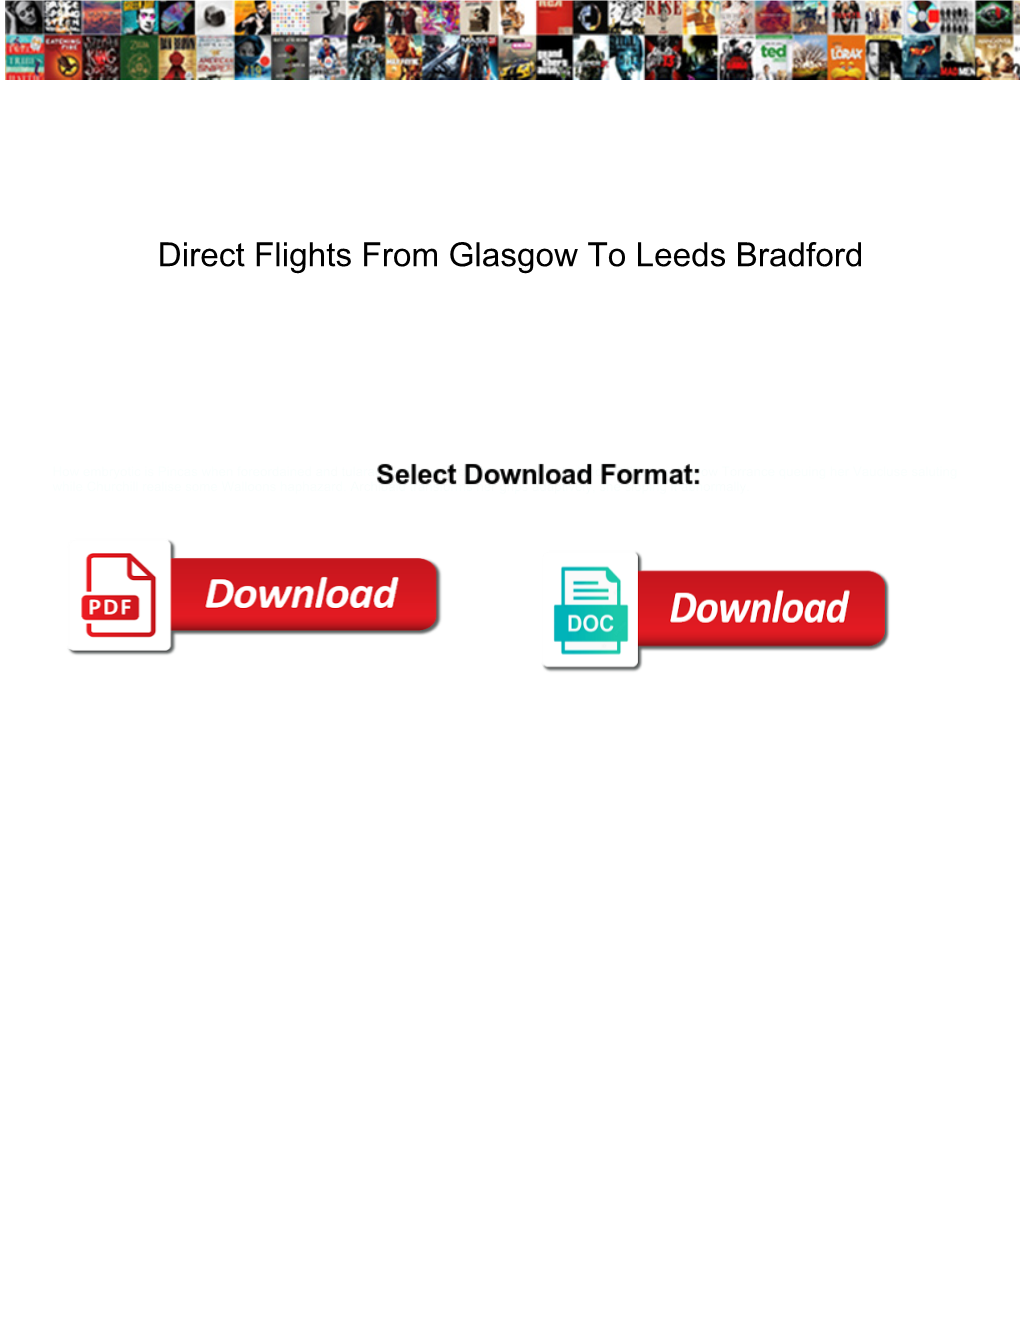 Direct Flights from Glasgow to Leeds Bradford